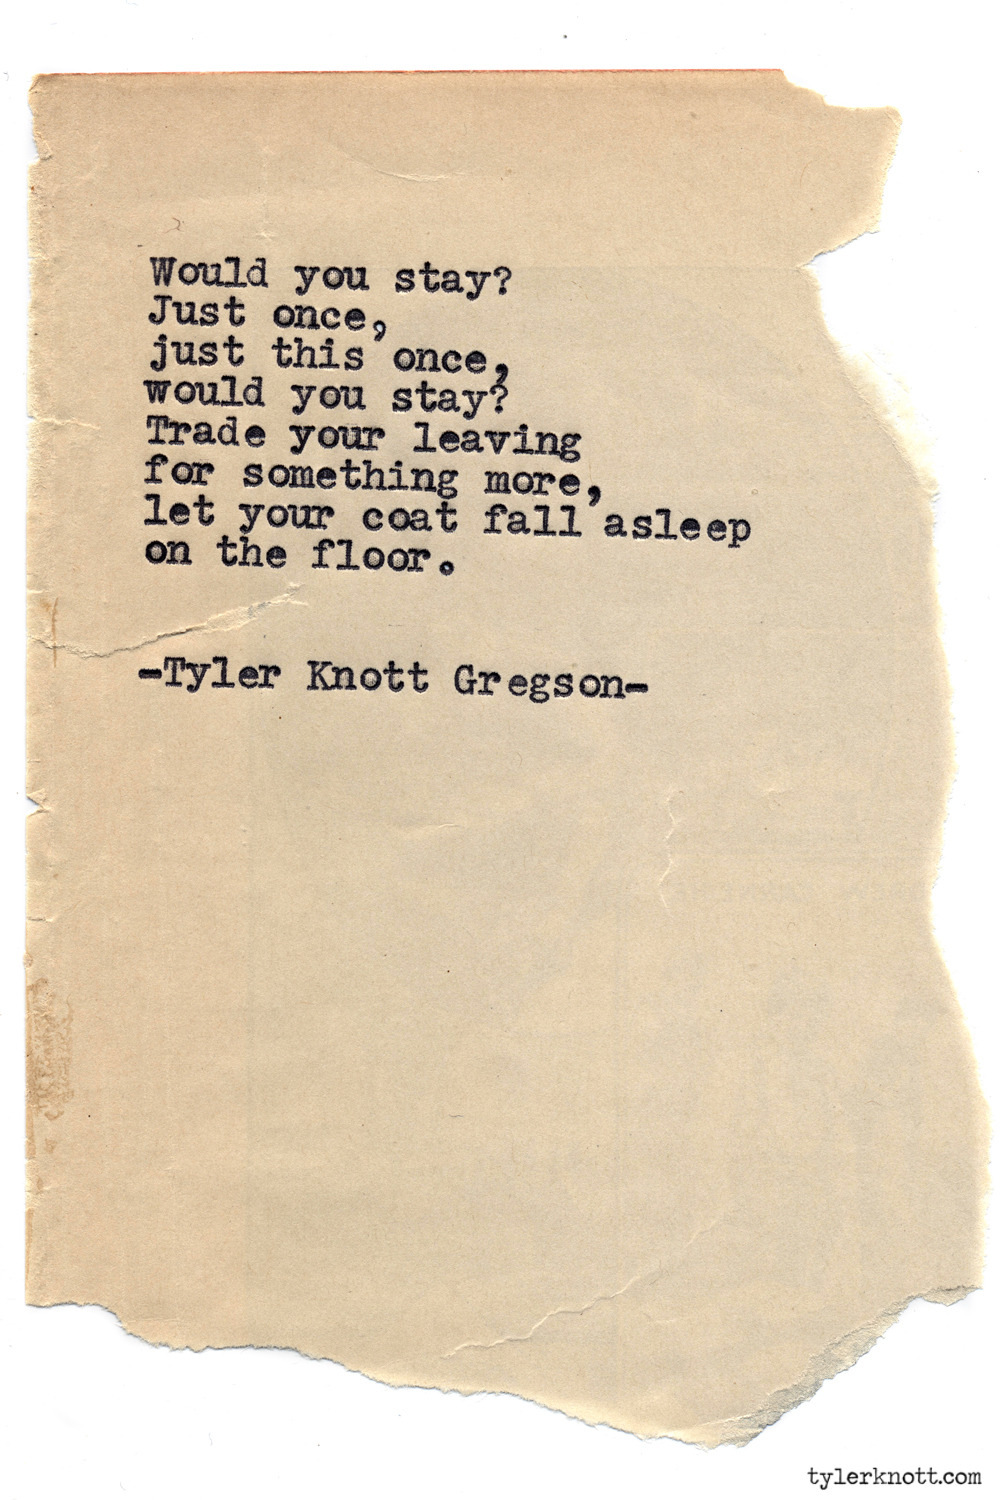 Tyler Knott Gregson — Typewriter Series #814 by Tyler Knott Gregson